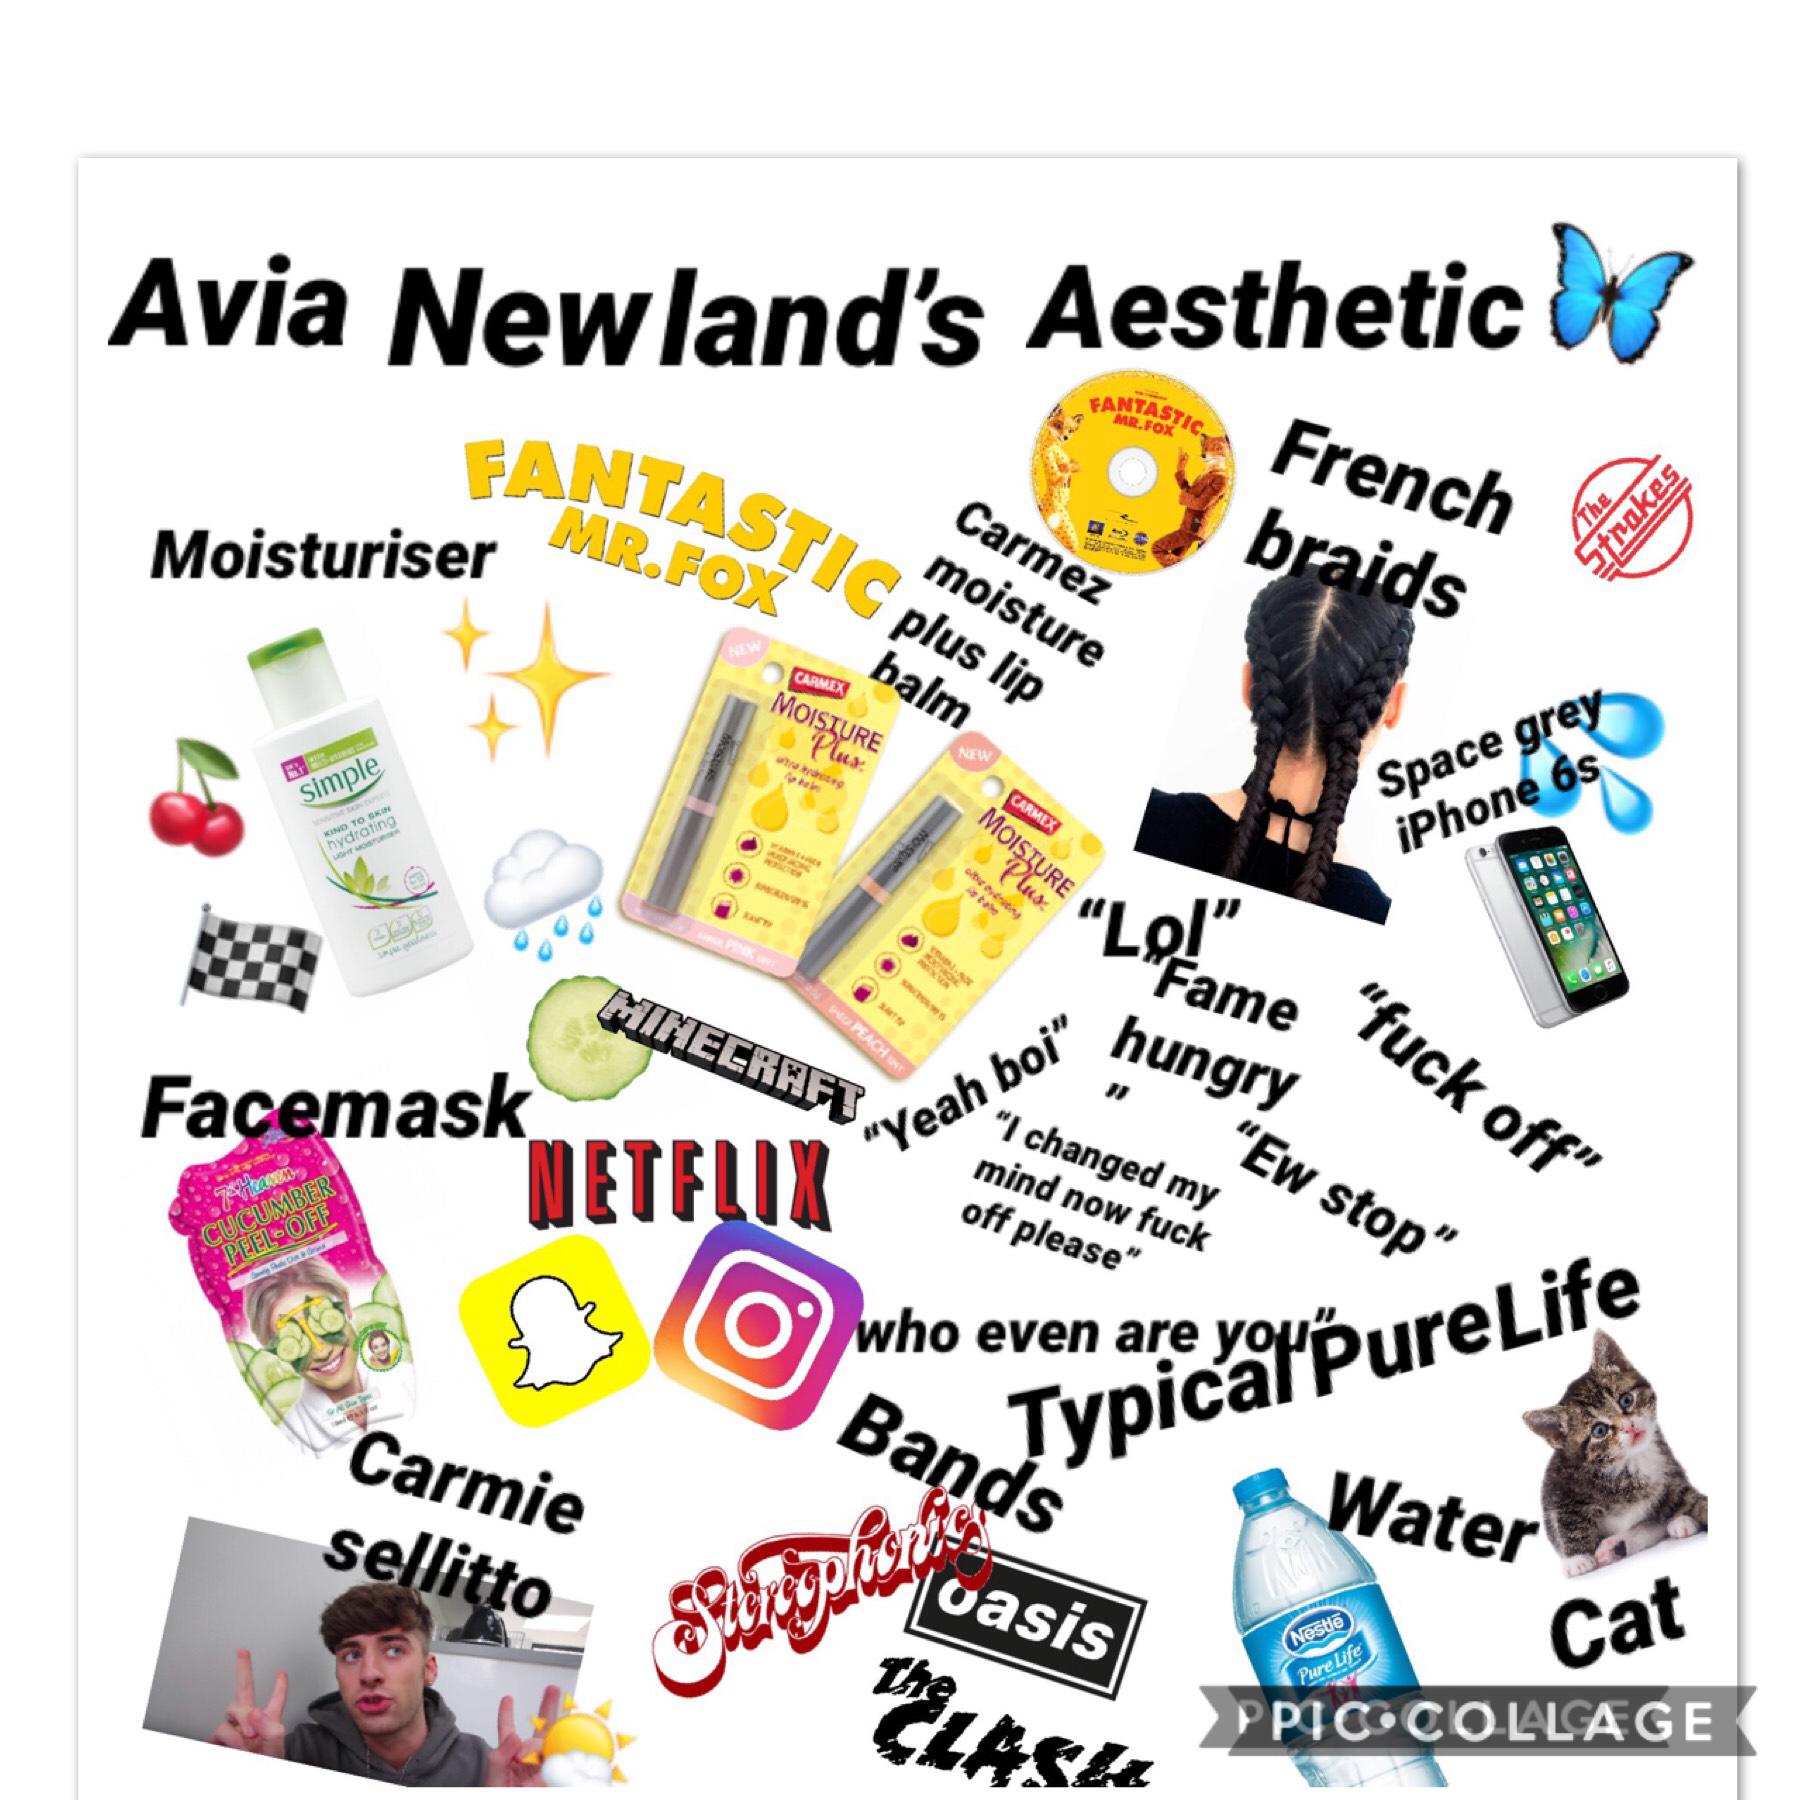 Avia Newland’s aesthetic 